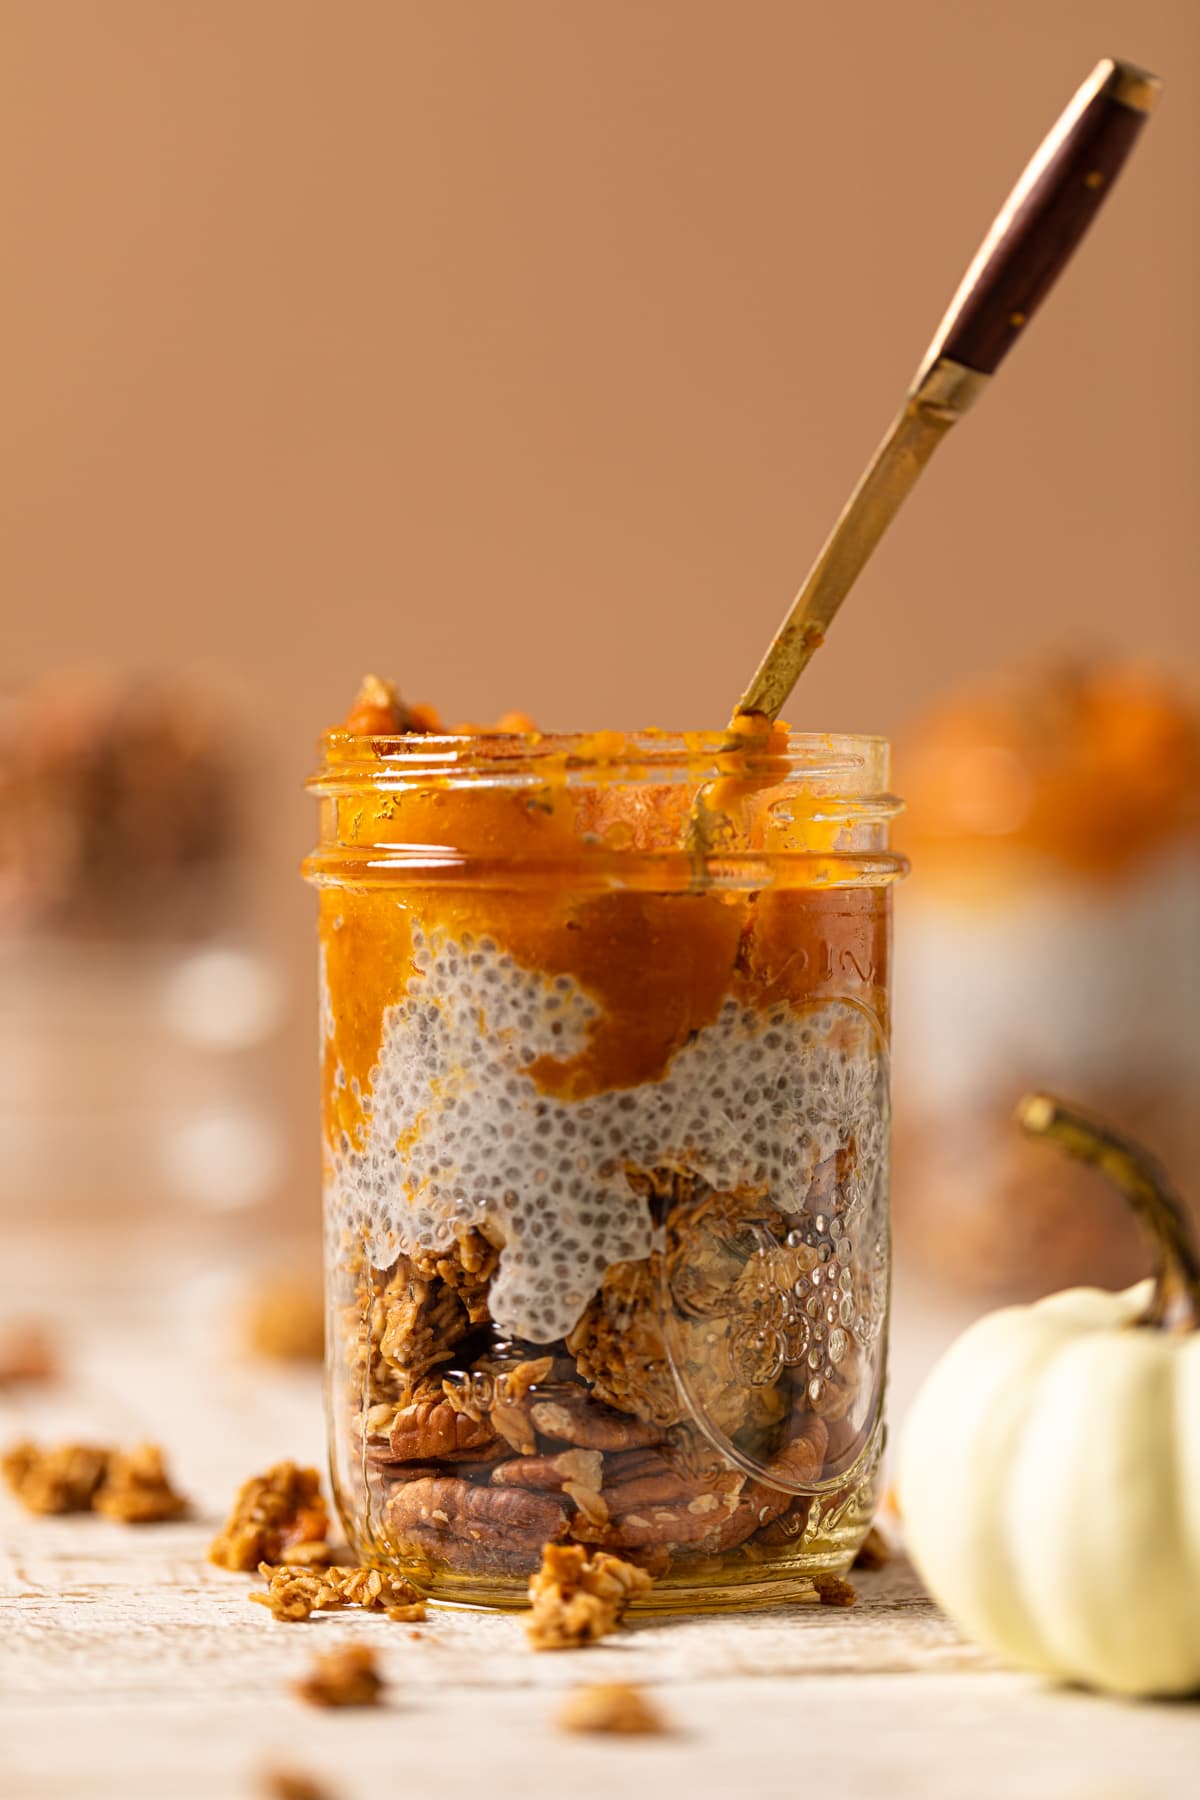 Spoon in a jar of Pumpkin Pie Chia Pudding